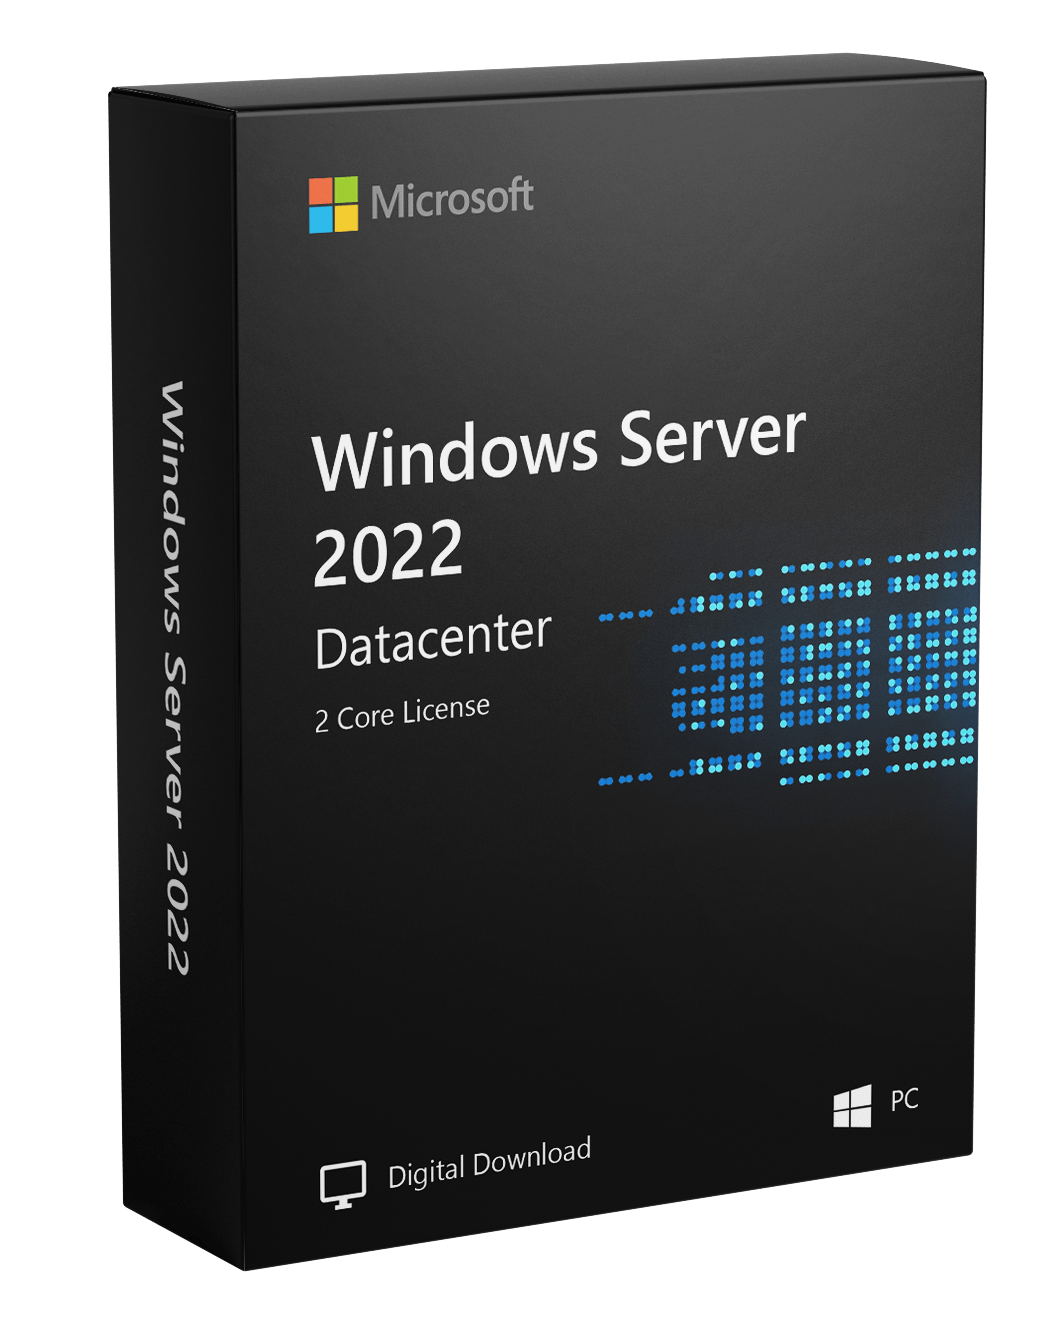 Microsoft Software Windows Server 2022 Datacenter - 2 Core License box